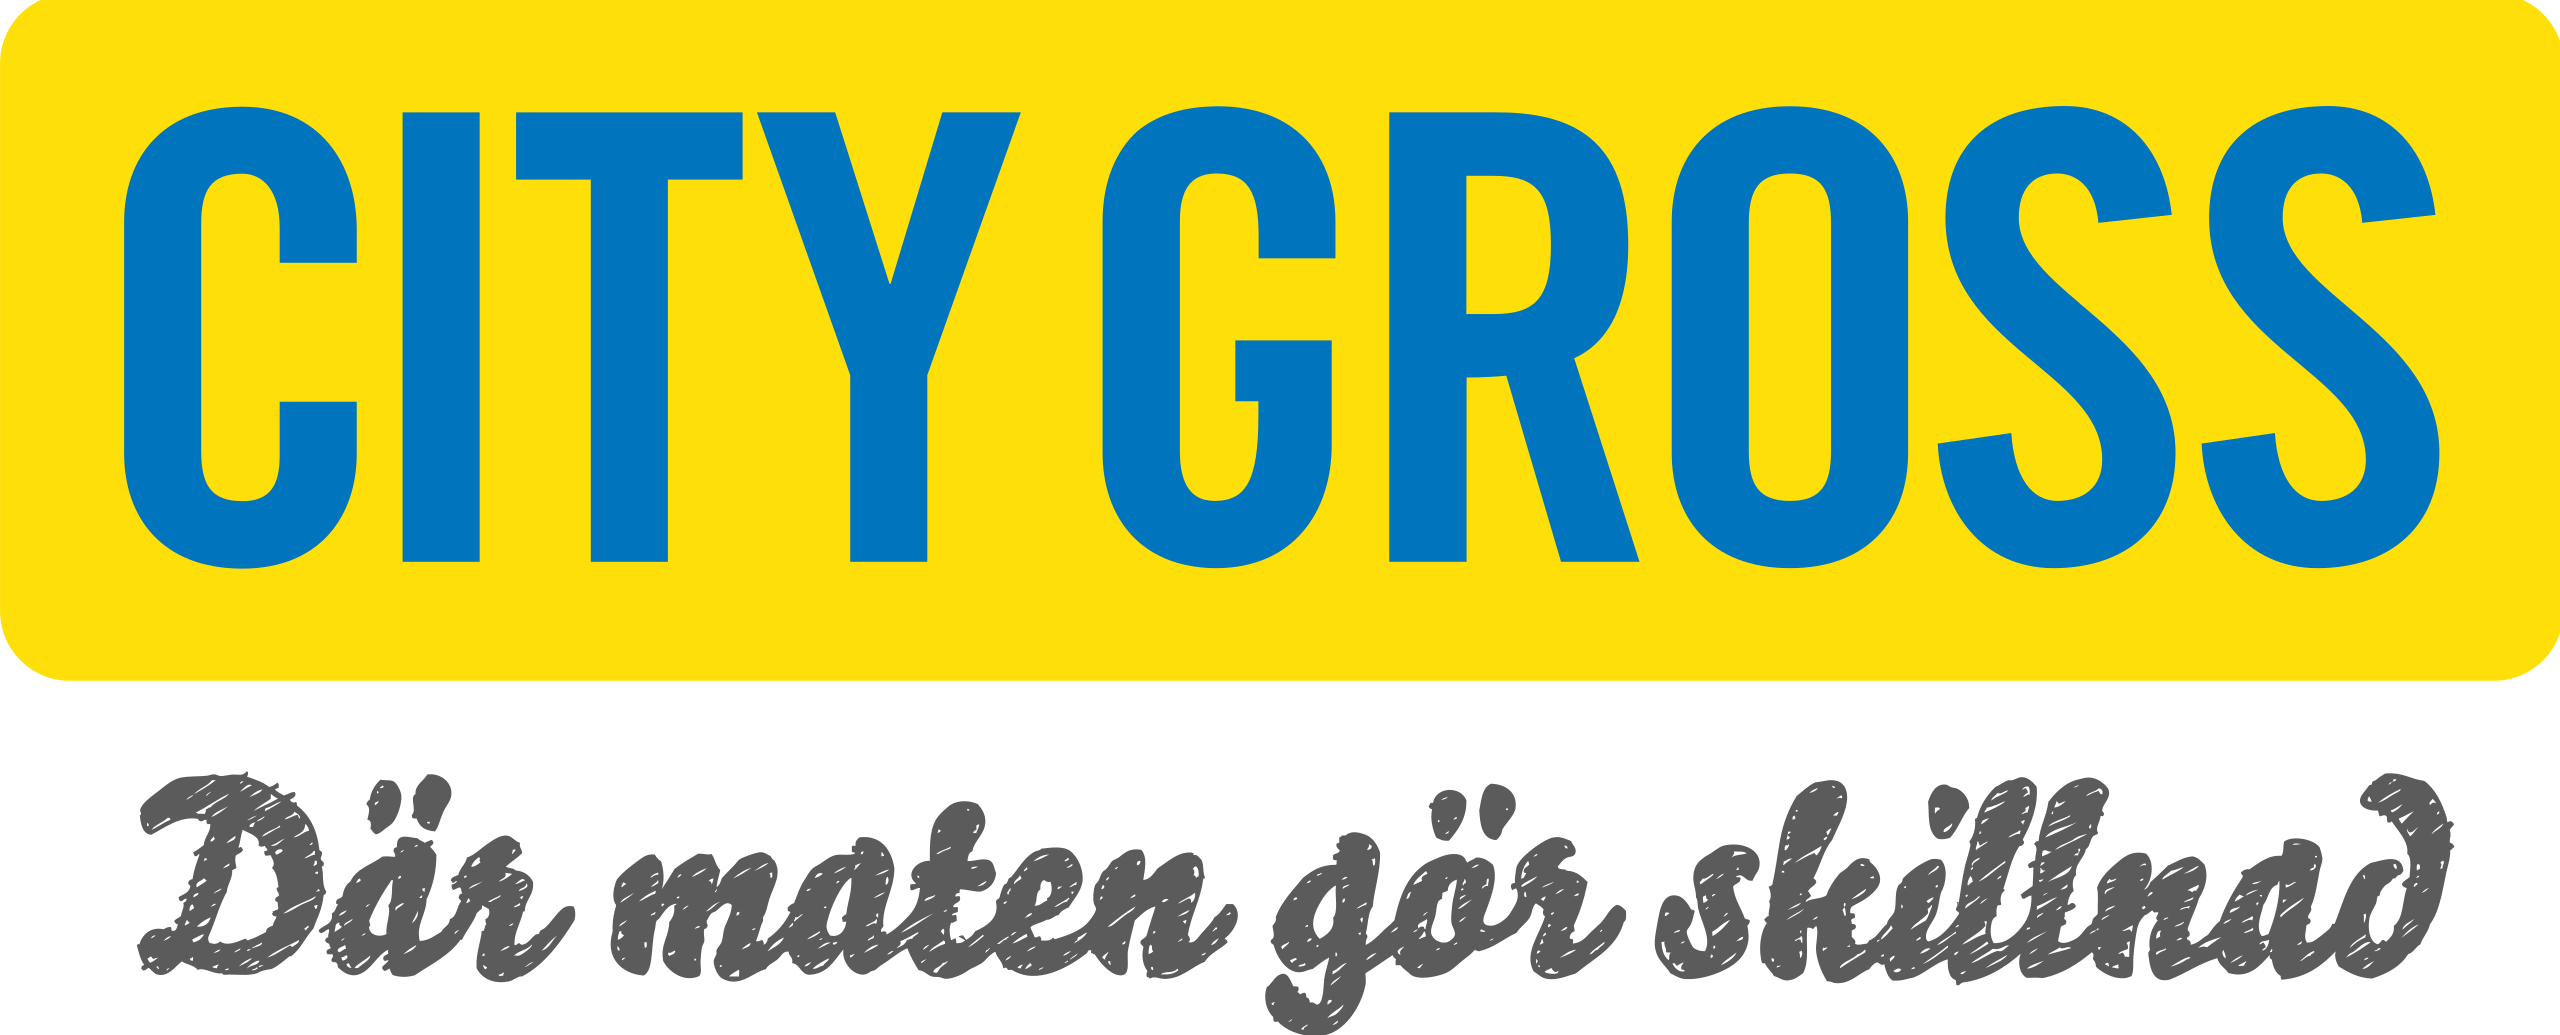 Citygross logo